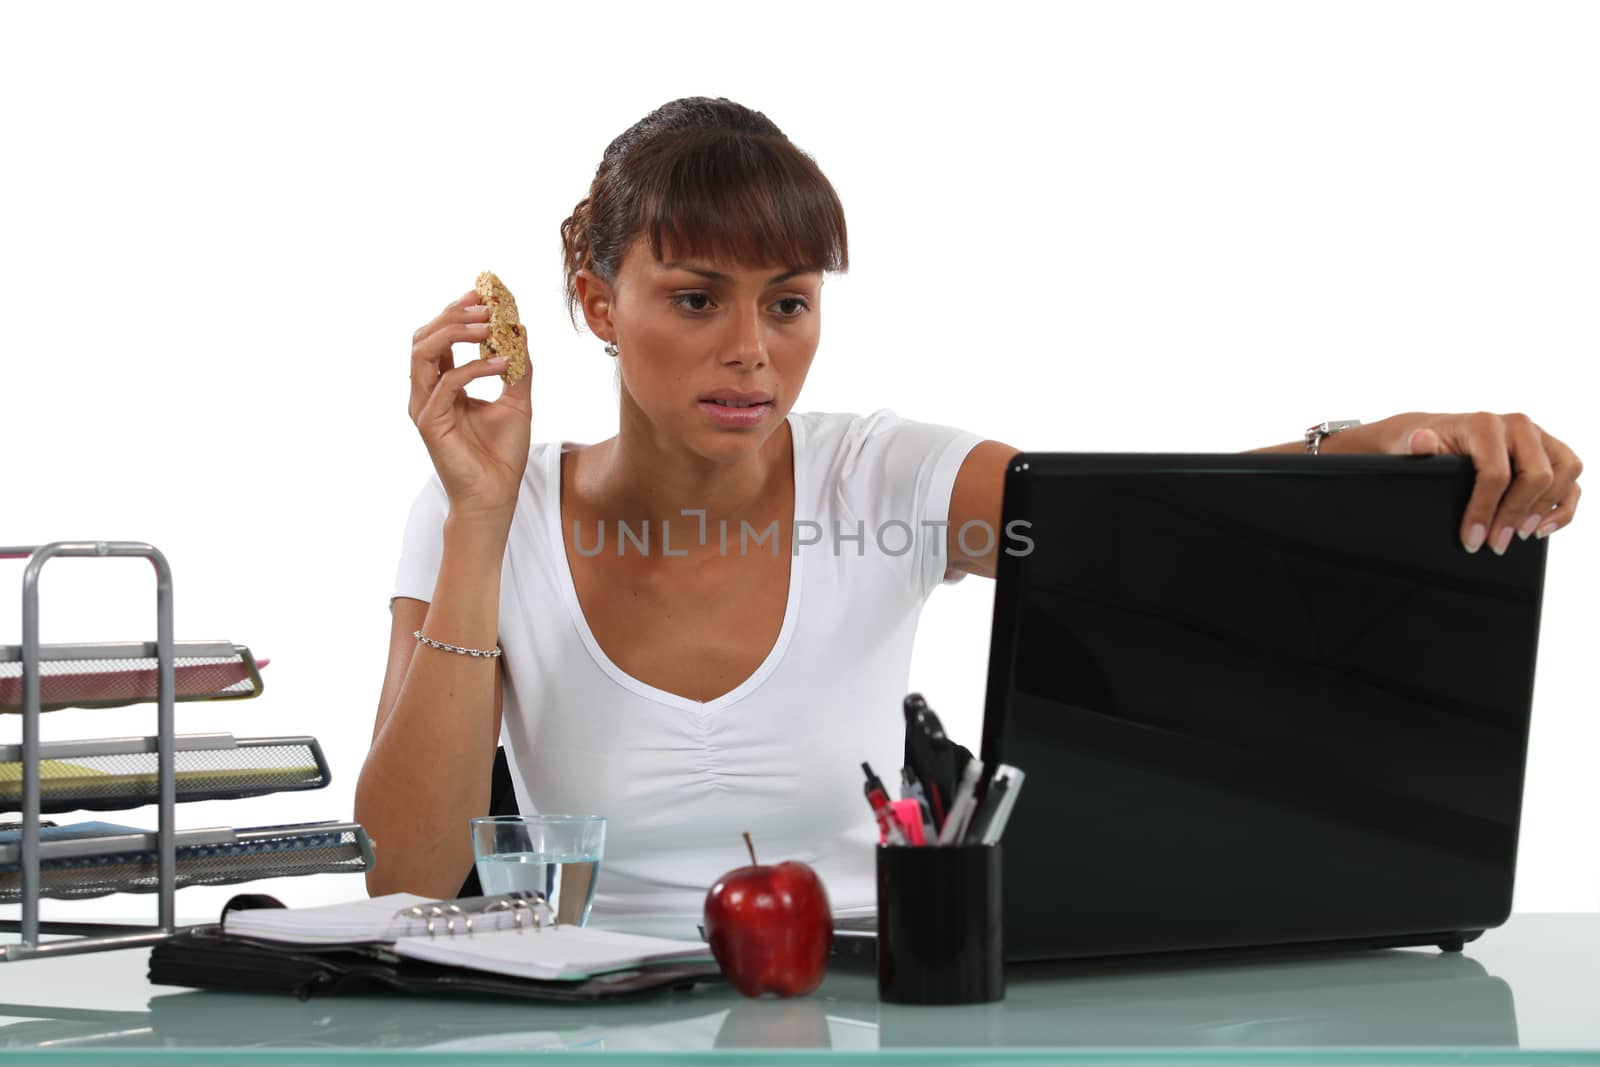 Eating at her desk by phovoir